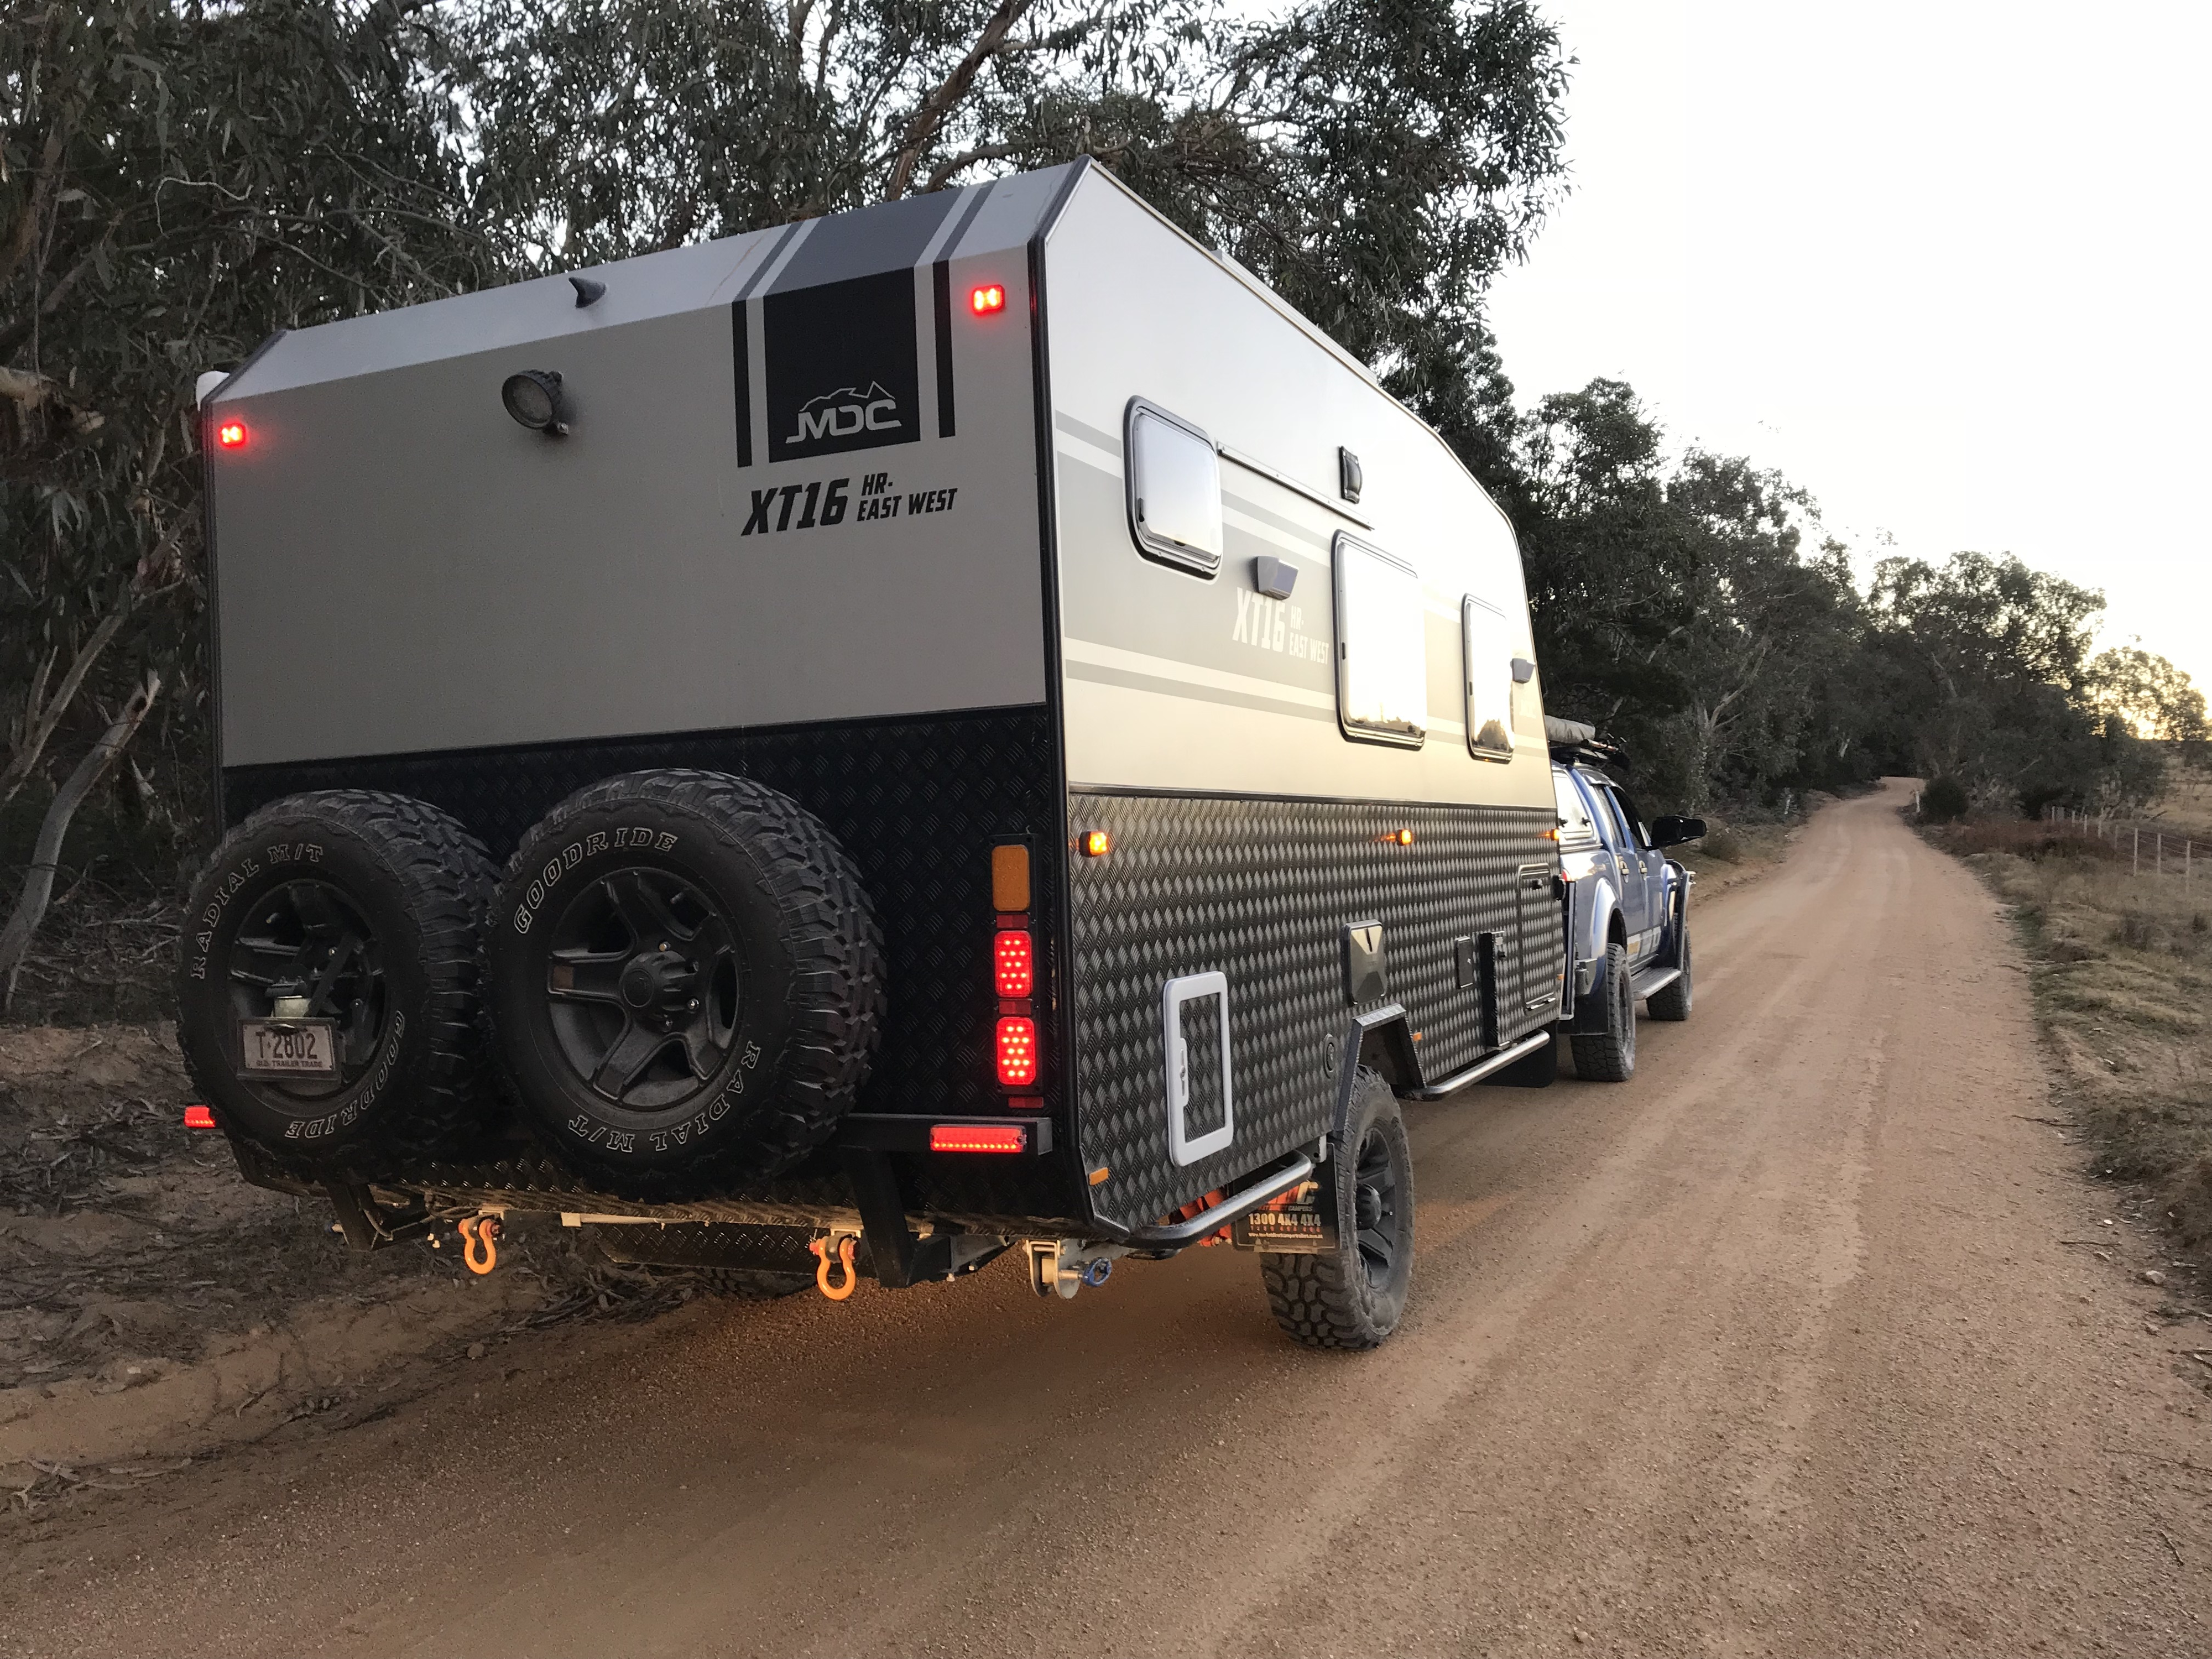 Road Trips Australia Episode 18